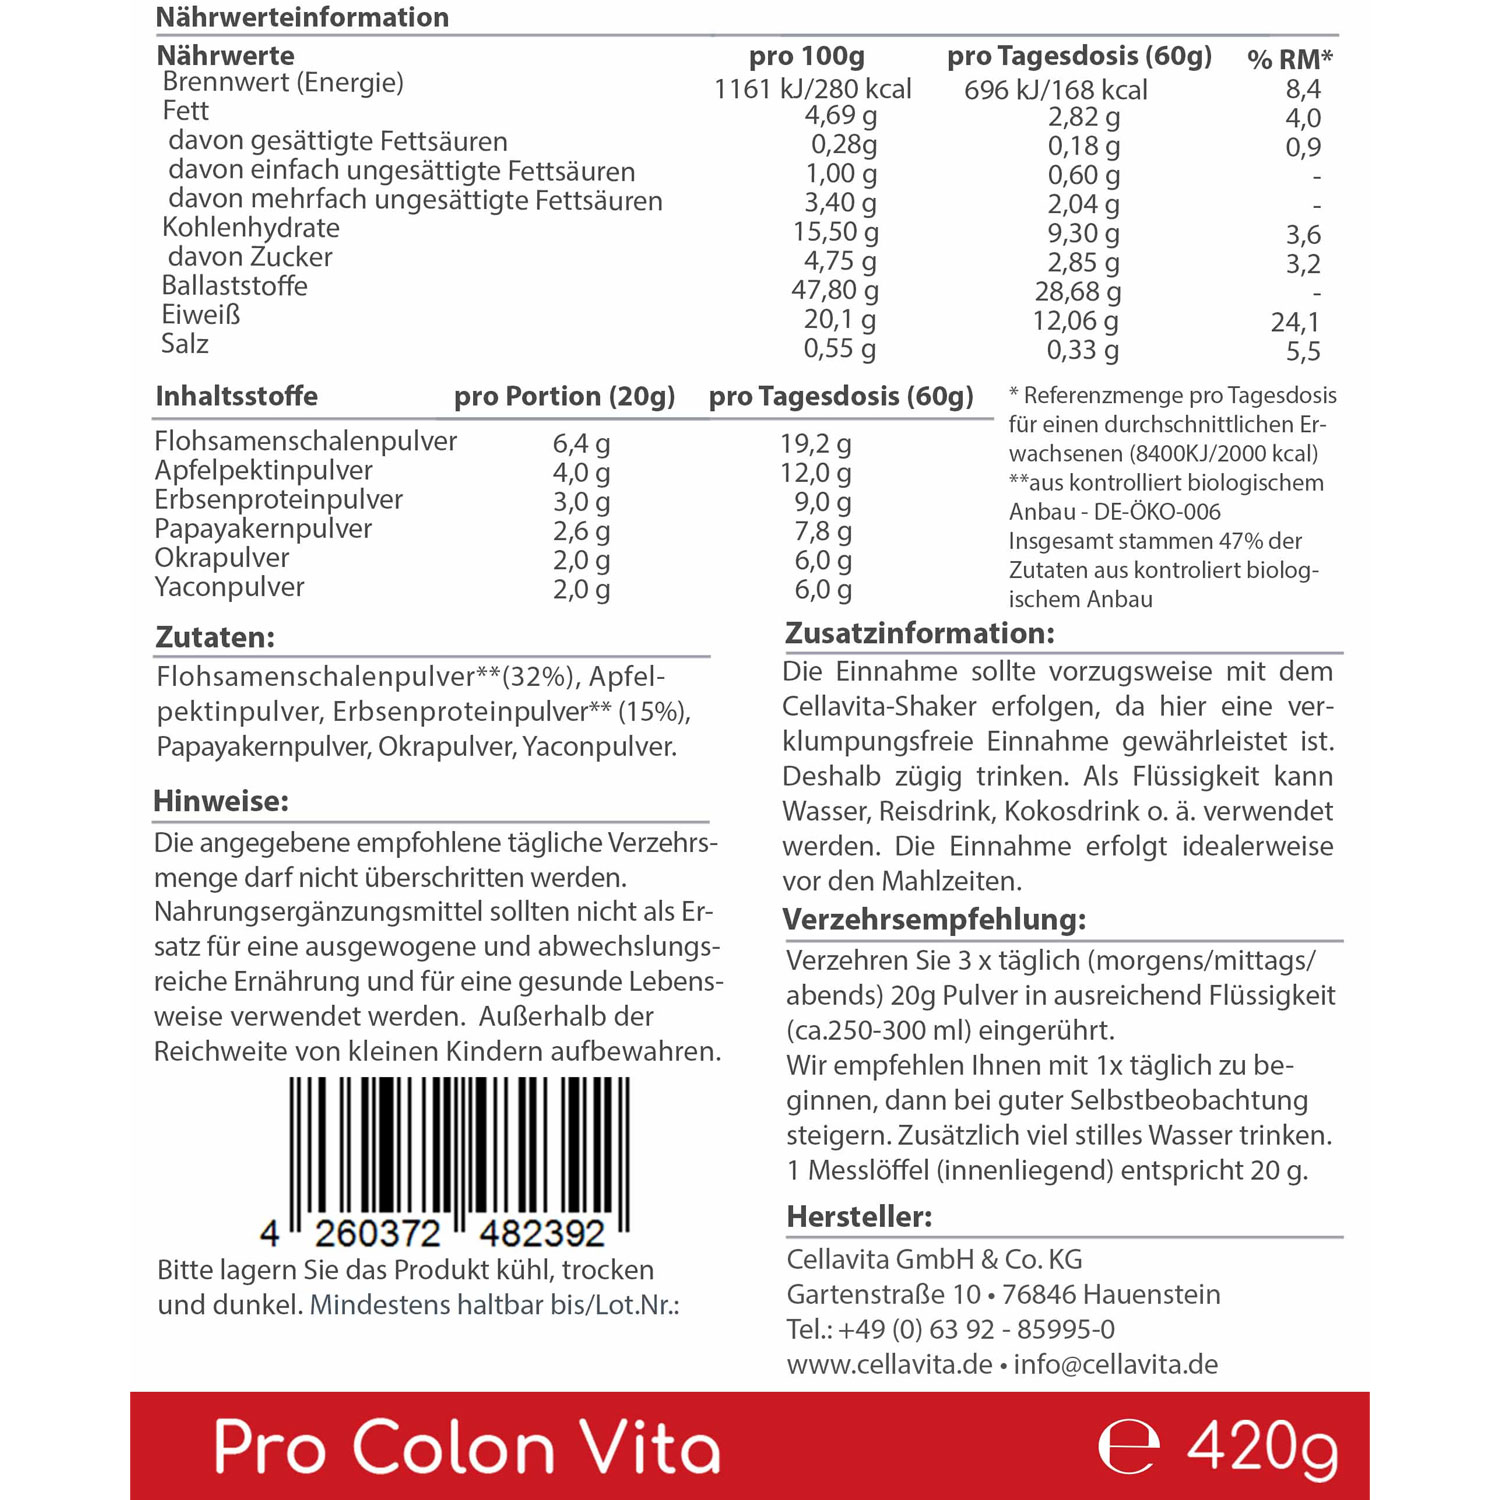 Pro Colon Vita von Cellavita - Etikett Rückseite